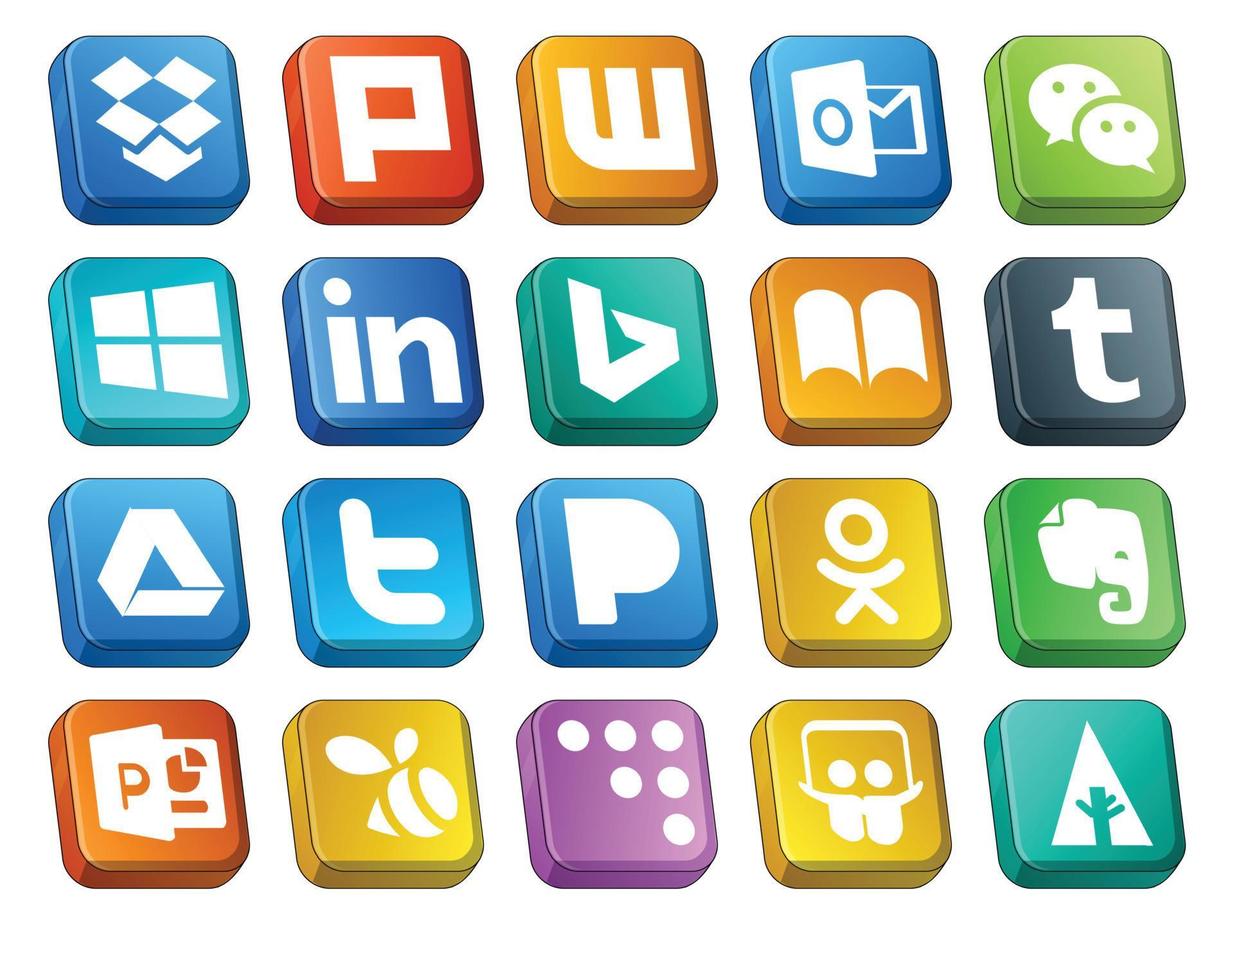 20 Social Media Icon Pack Including powerpoint odnoklassniki bing pandora twitter vector